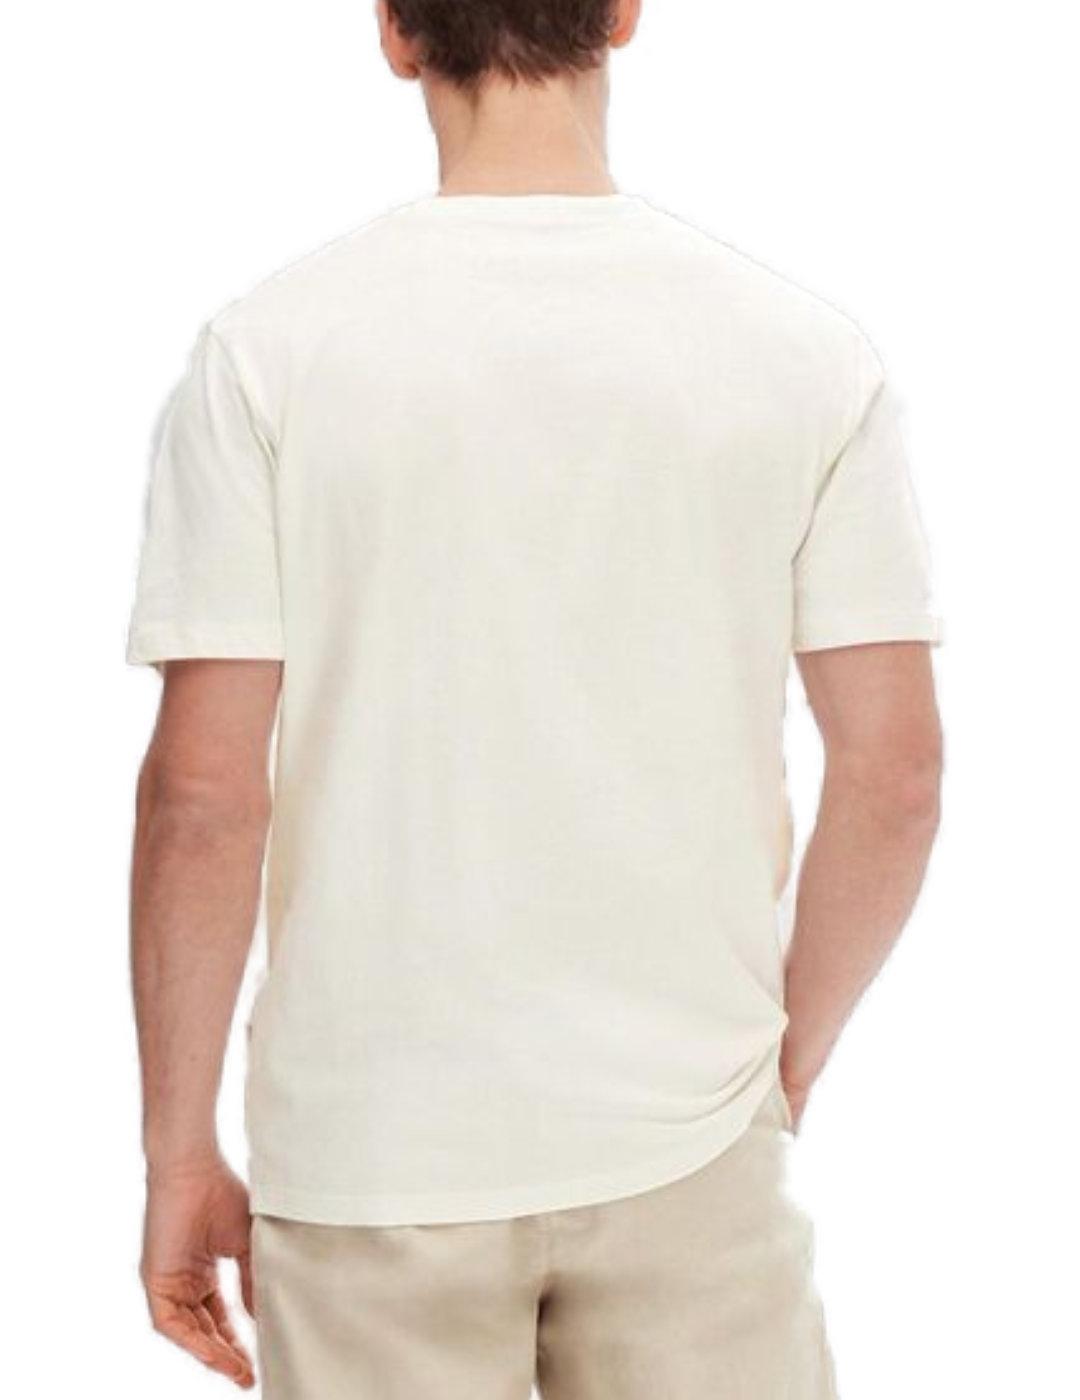 Camiseta Selected Gaz blanco roto manga corta para hombre